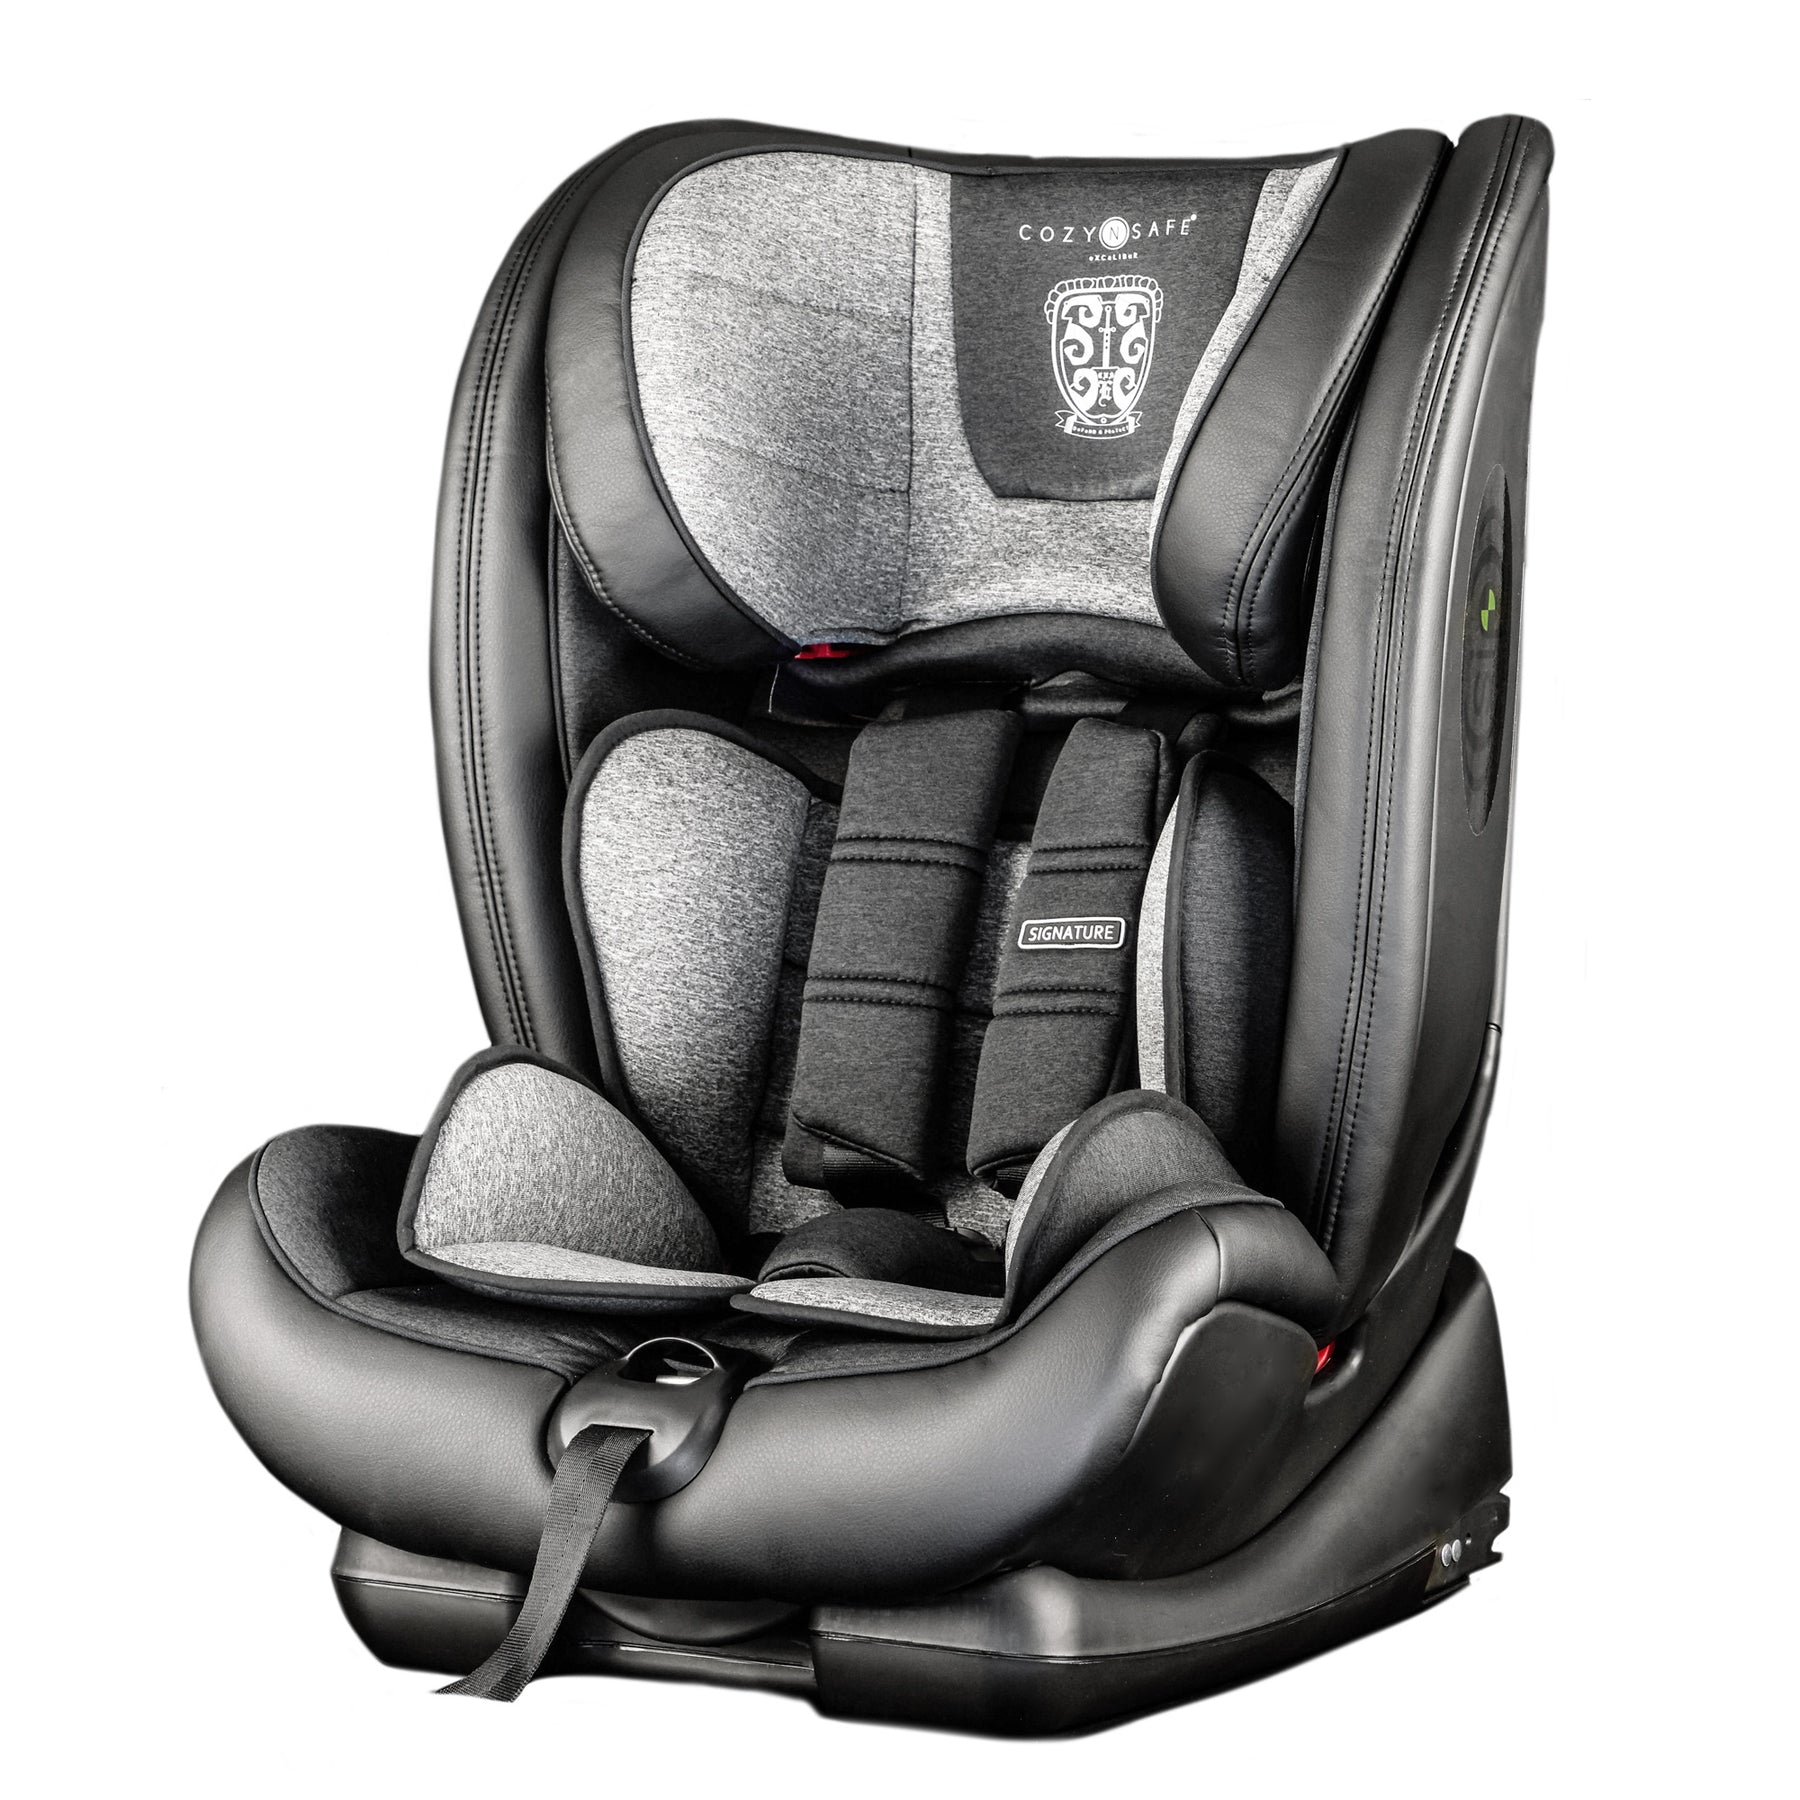 Excalibur Group 1/2/3 Child Car Seat - (25KG Harness) Graphite